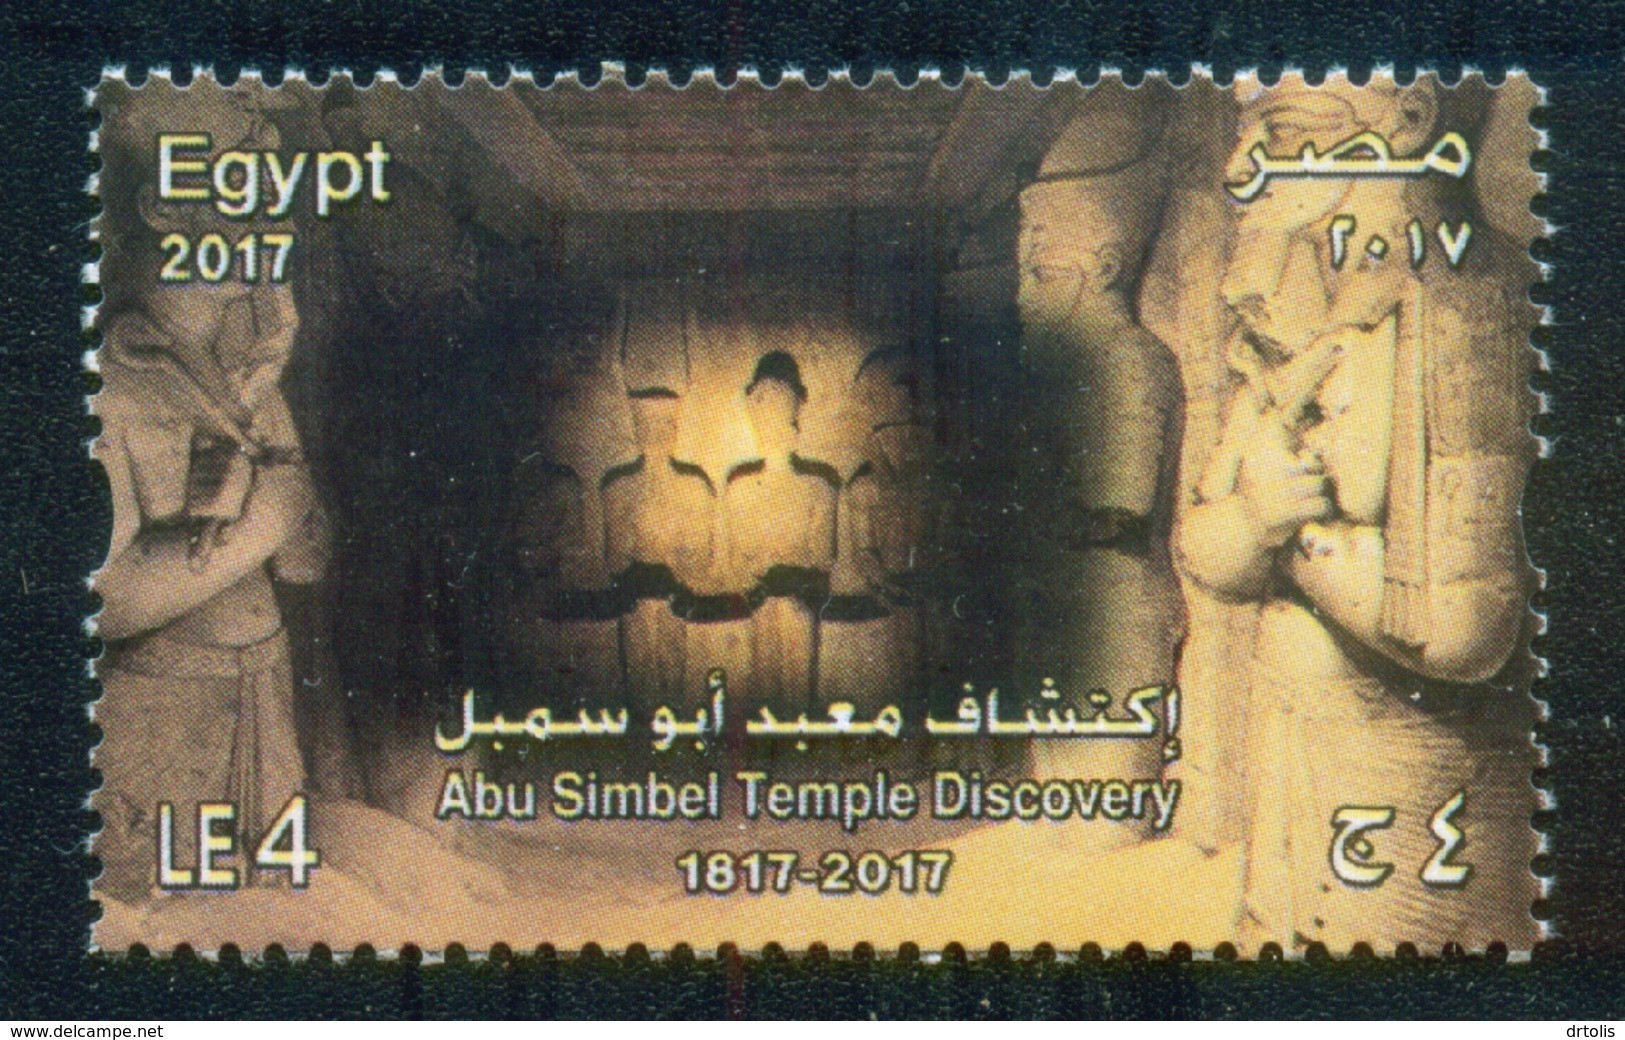 EGYPT / 2017 / SUN VERTICALITY / ABU SIMBEL TEMPLE / RAMESES II / ARCHEOLOGY / MNH - Ongebruikt